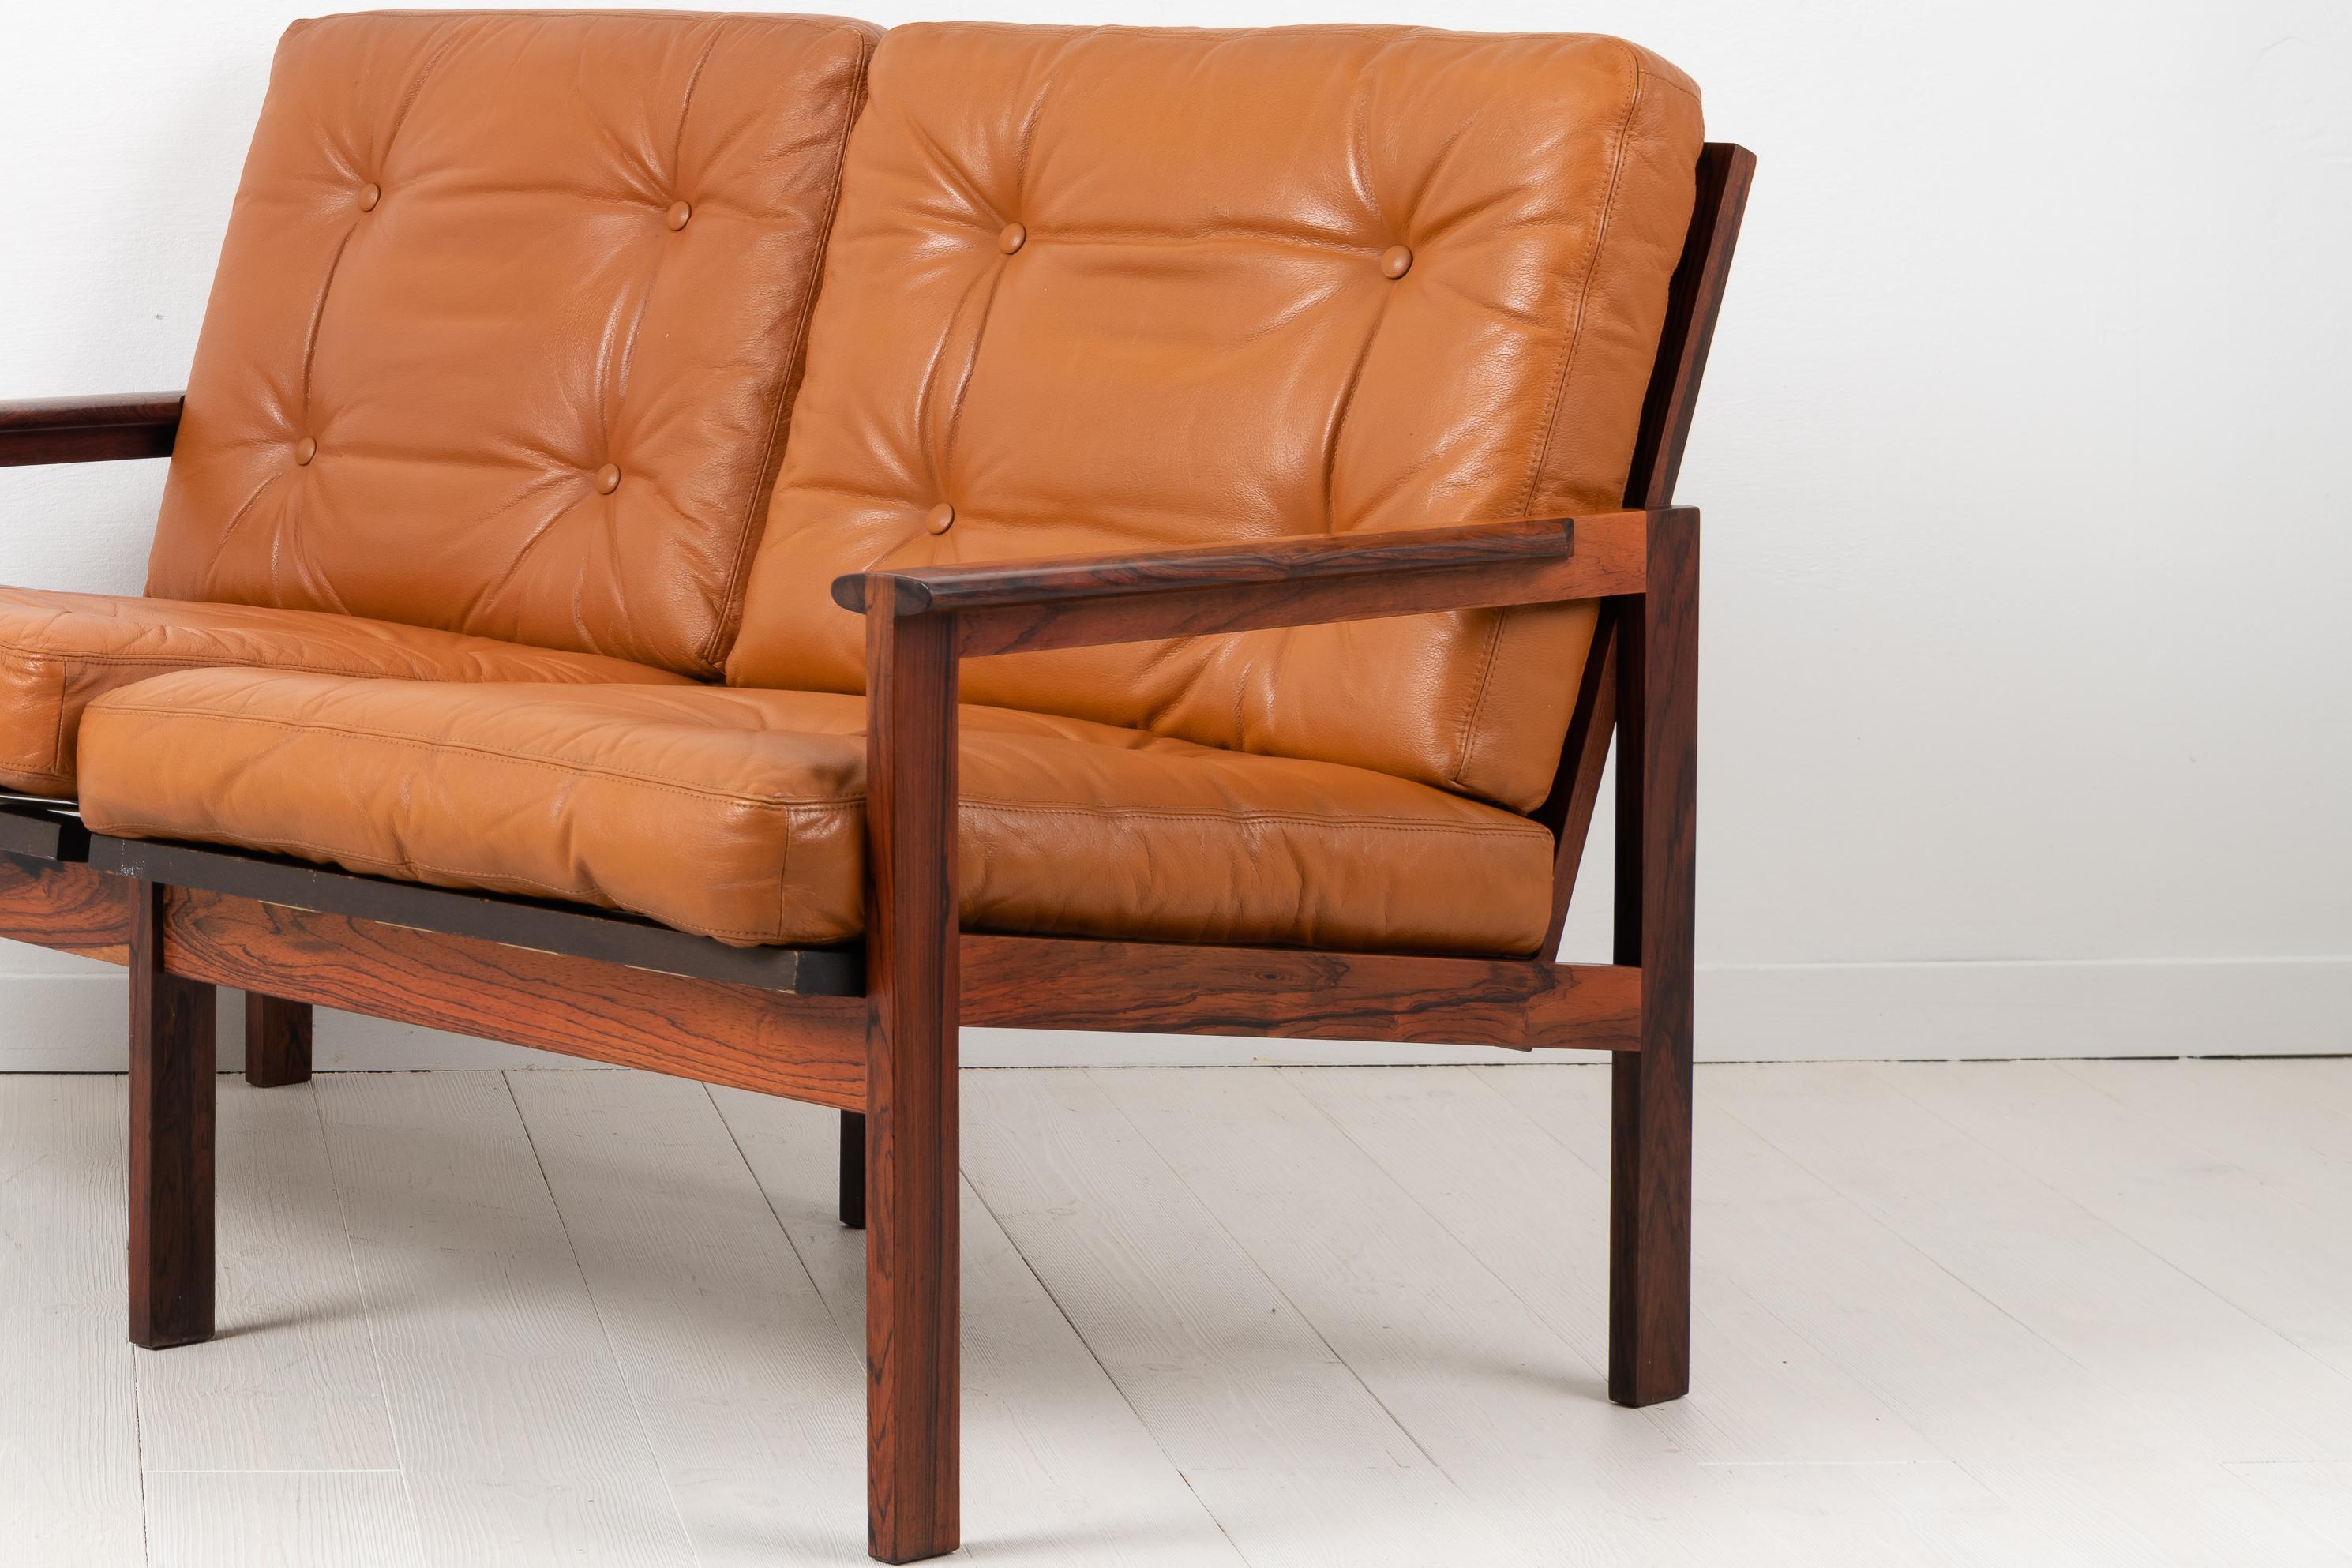 Illum Wikkelsø Scandinavian Modern Leather 'Capella' Sofa In Good Condition For Sale In Kramfors, SE